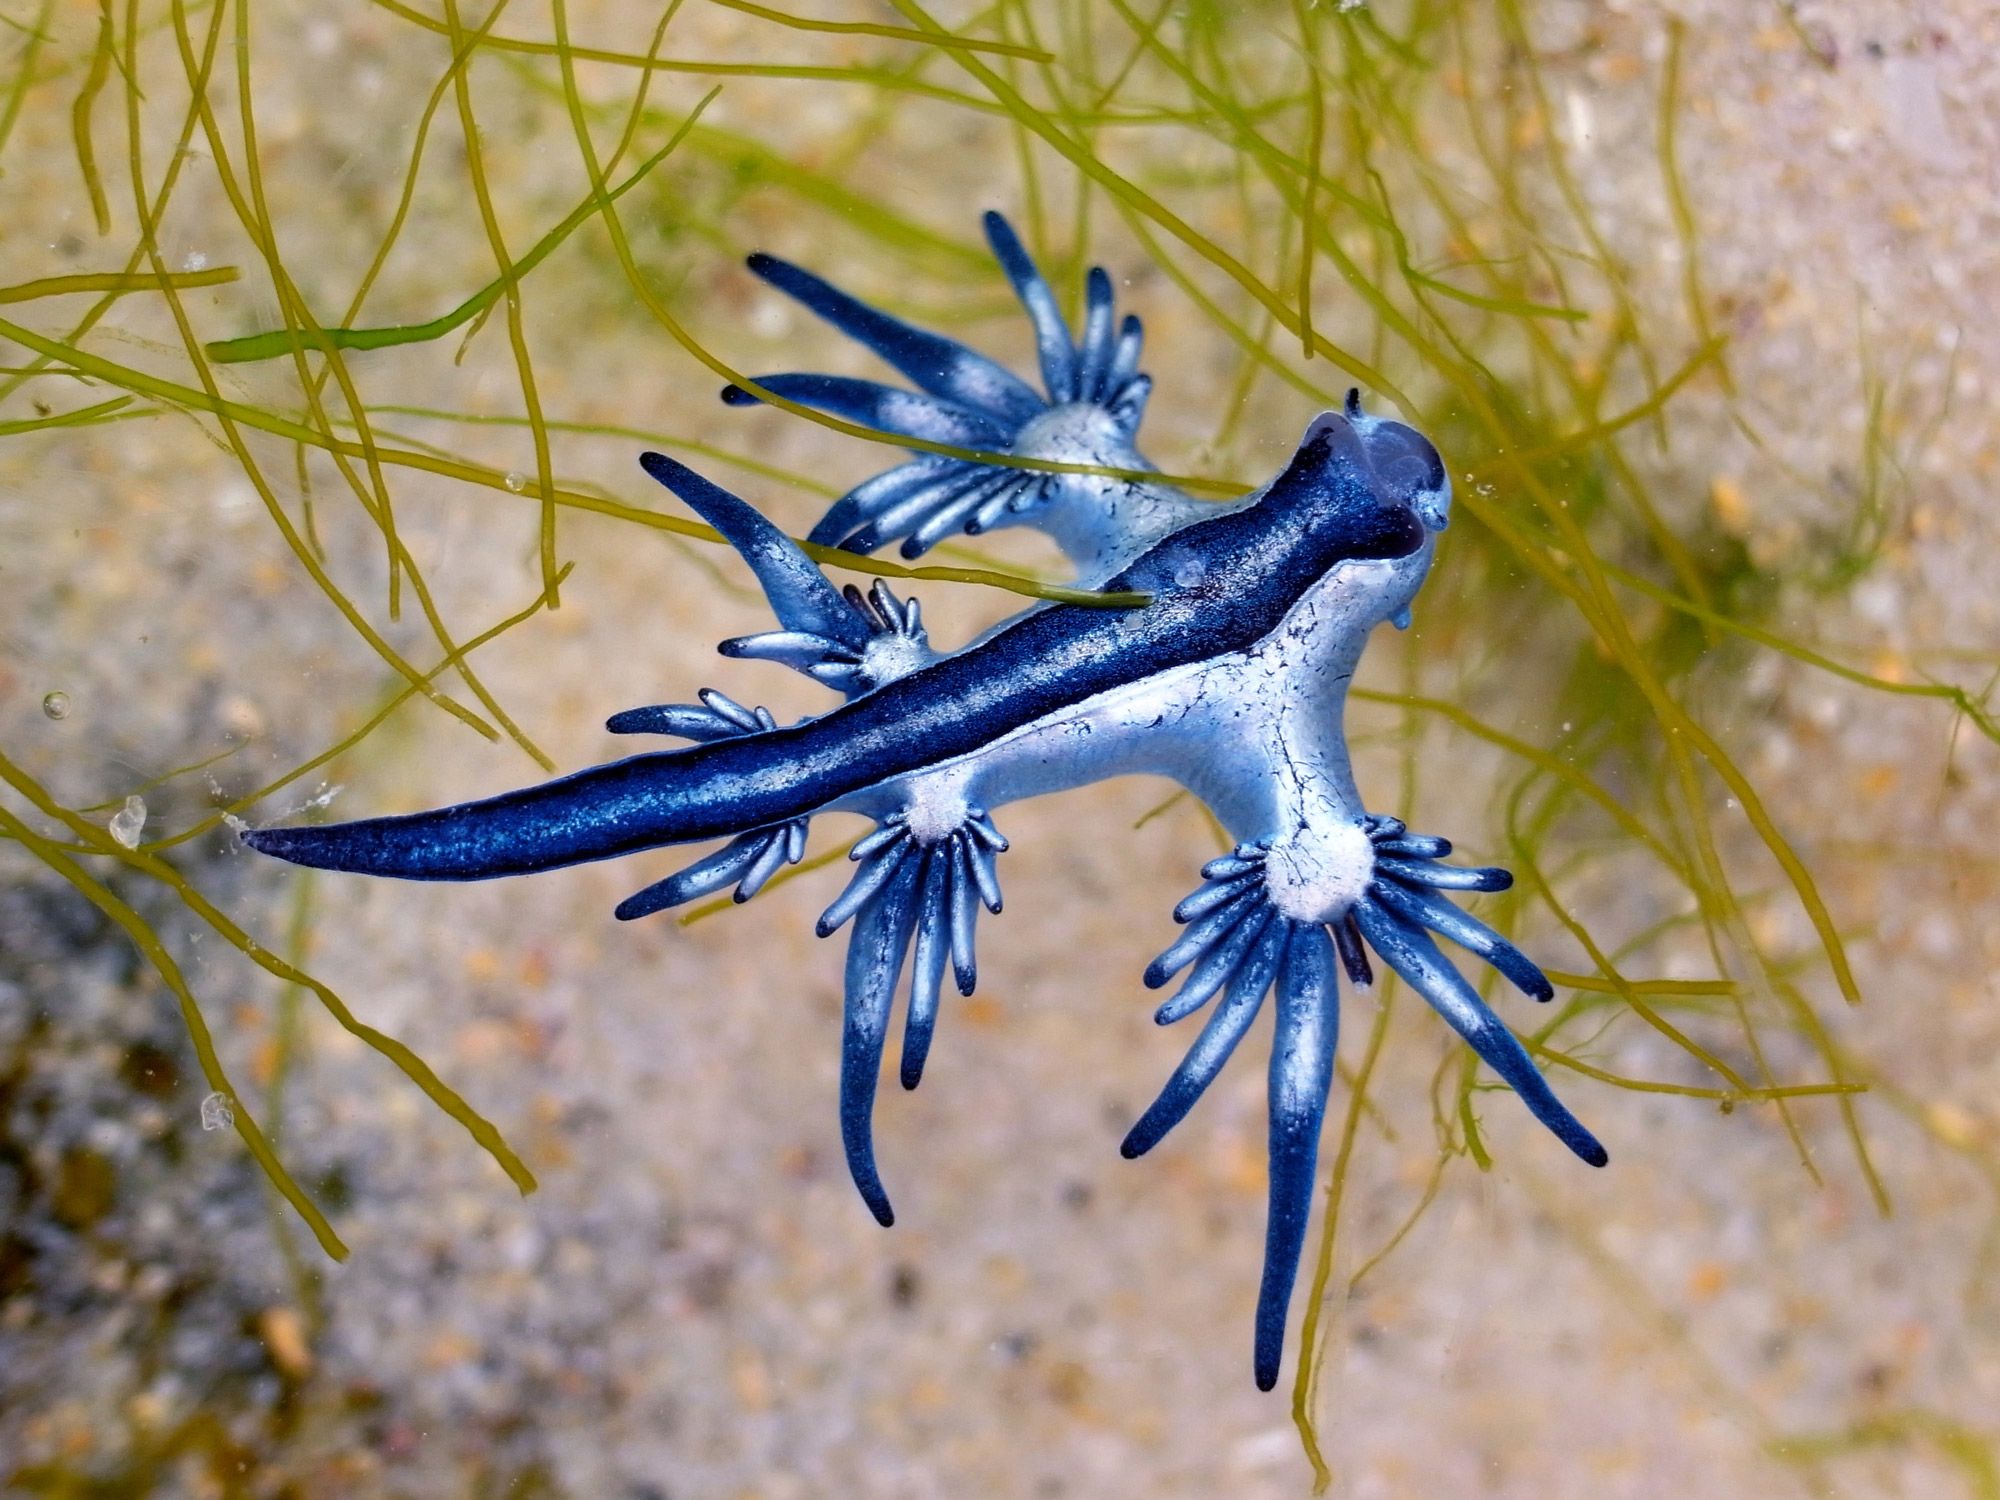 Venomous 'blue dragon' sea slug washed ashore in Texas | CNN